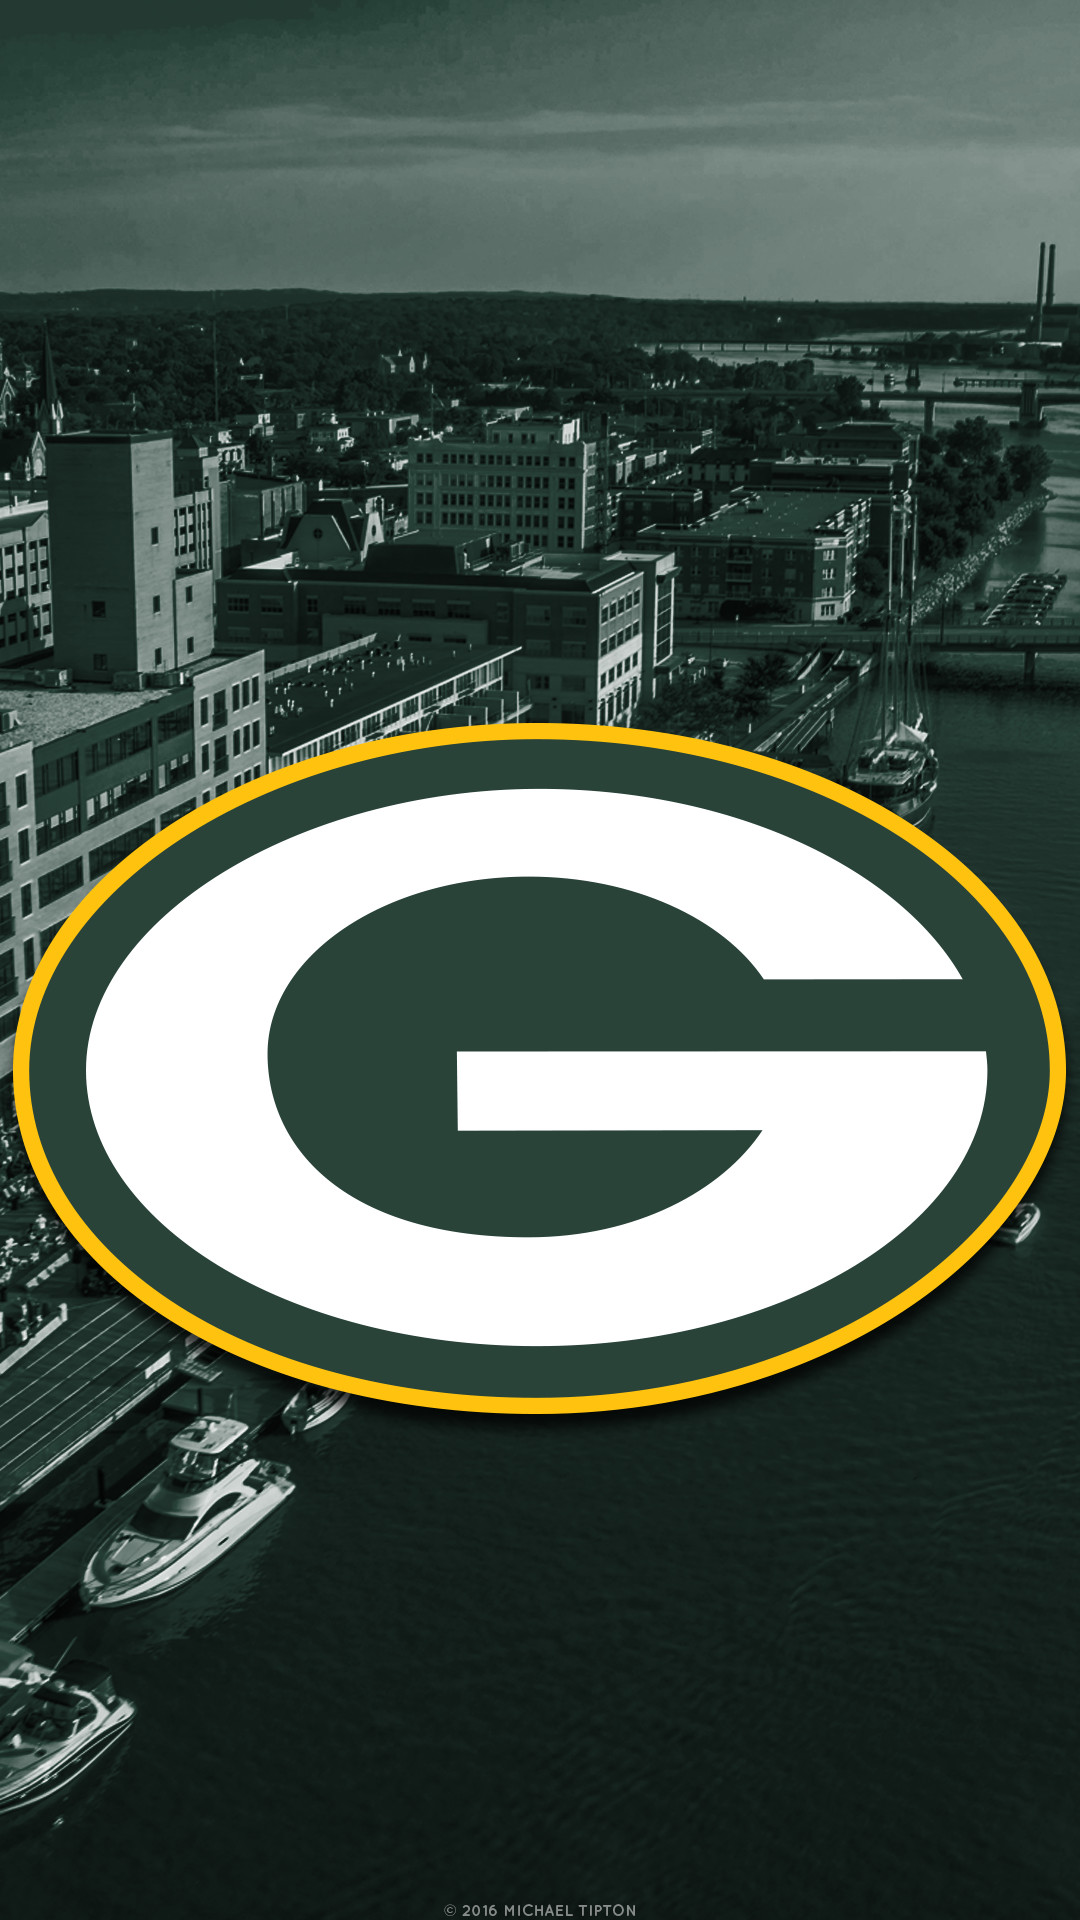 1080x1920 ... Green Bay Packers city 2017 logo wallpaper free iphone 5, 6, 7, galaxy